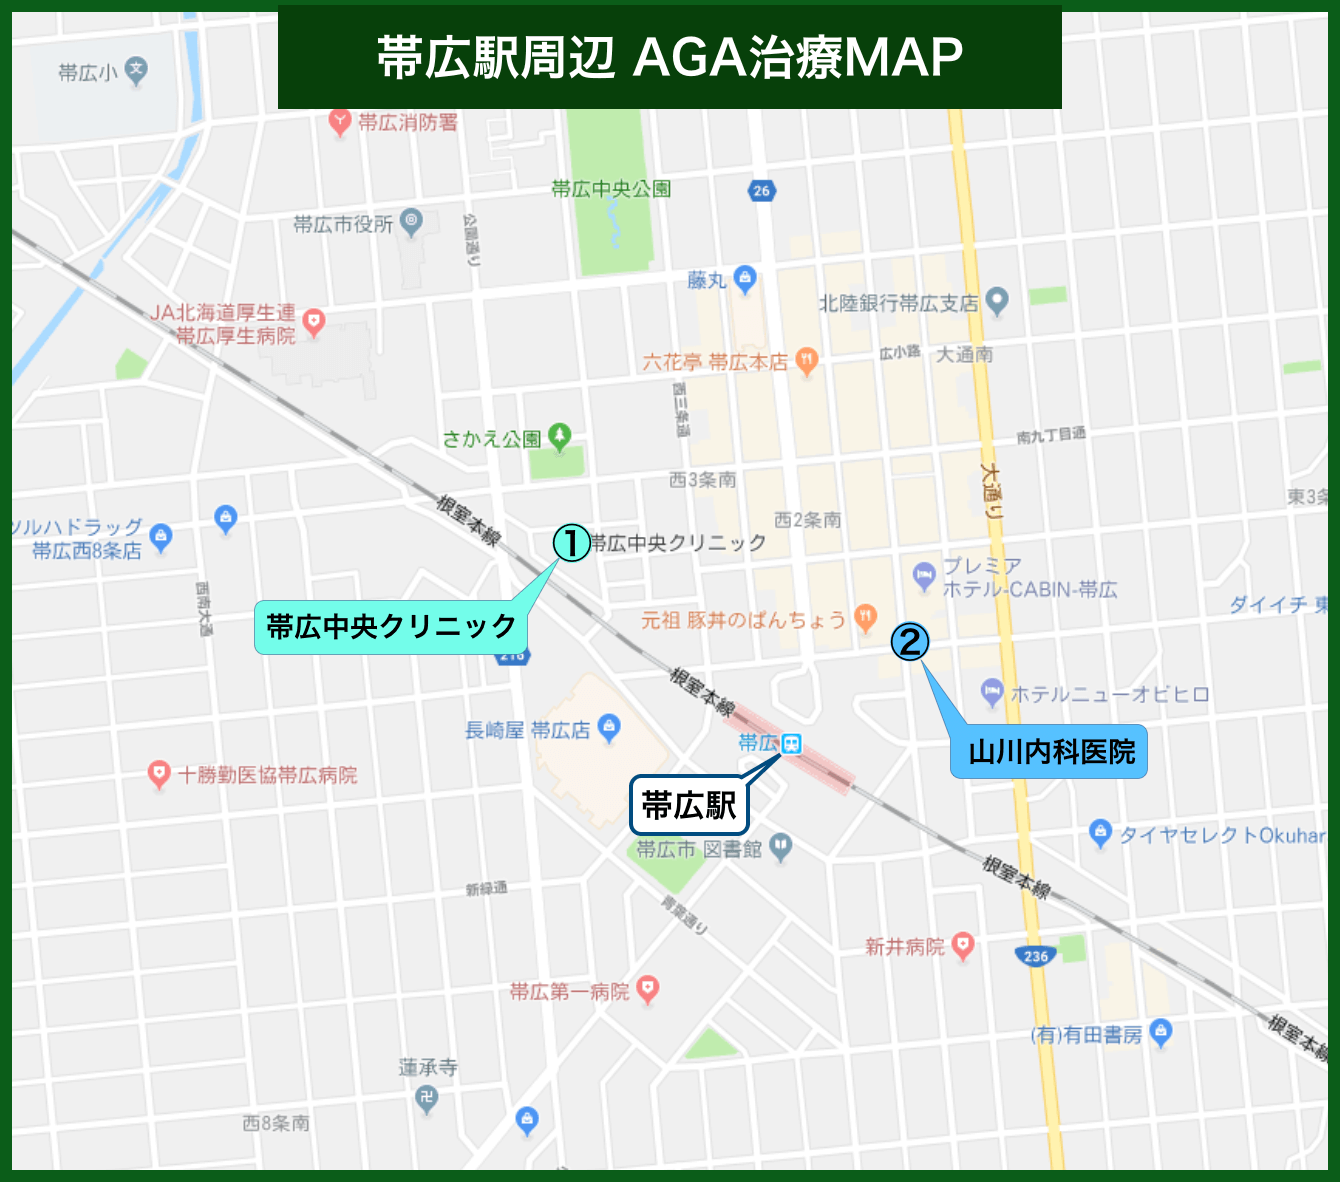 帯広駅周辺 AGA治療MAP